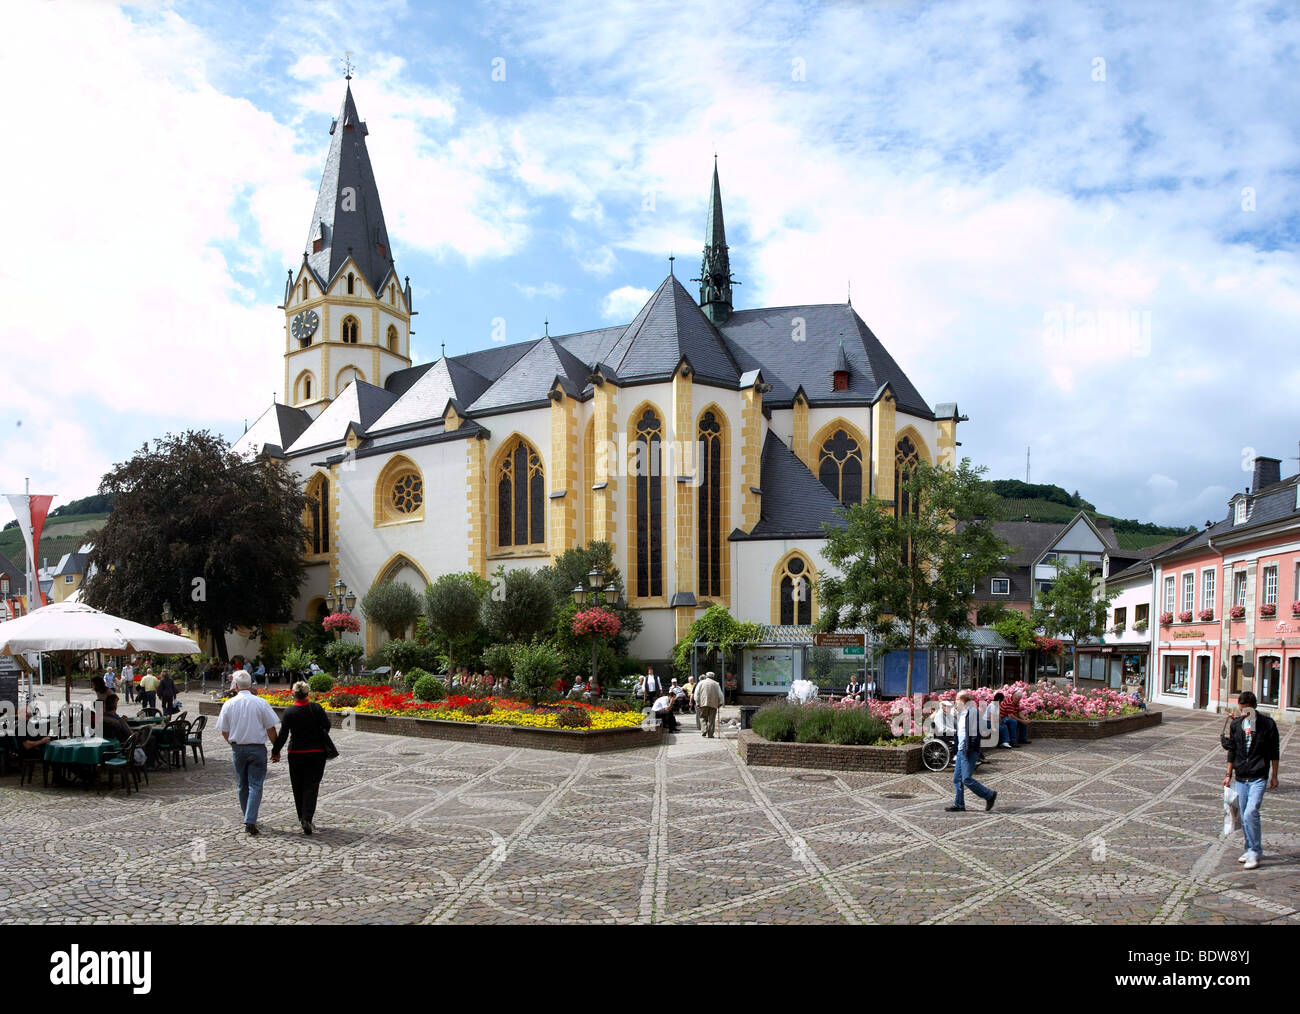 The parish church of St. Lawrence on the marketplace of Ahrweiler, Rhineland-Palatinate, Germany, Europe Stock Photo